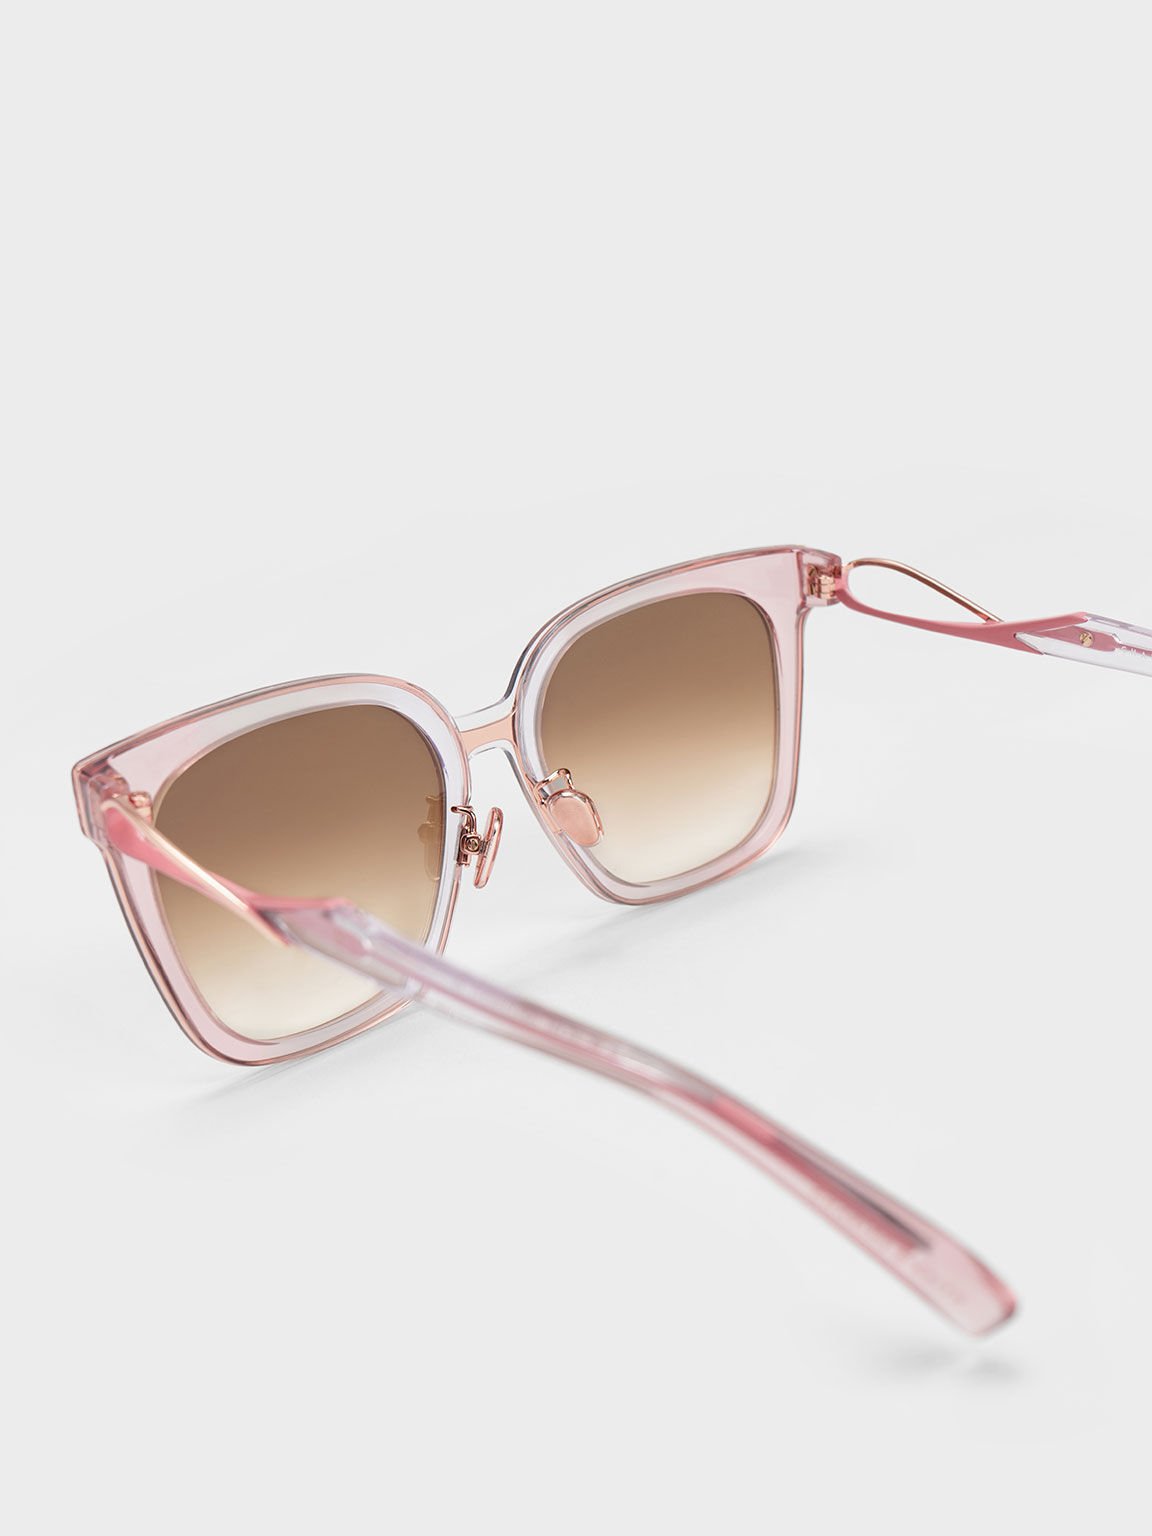 漸層膠框貓眼墨鏡, 粉紅色, hi-res